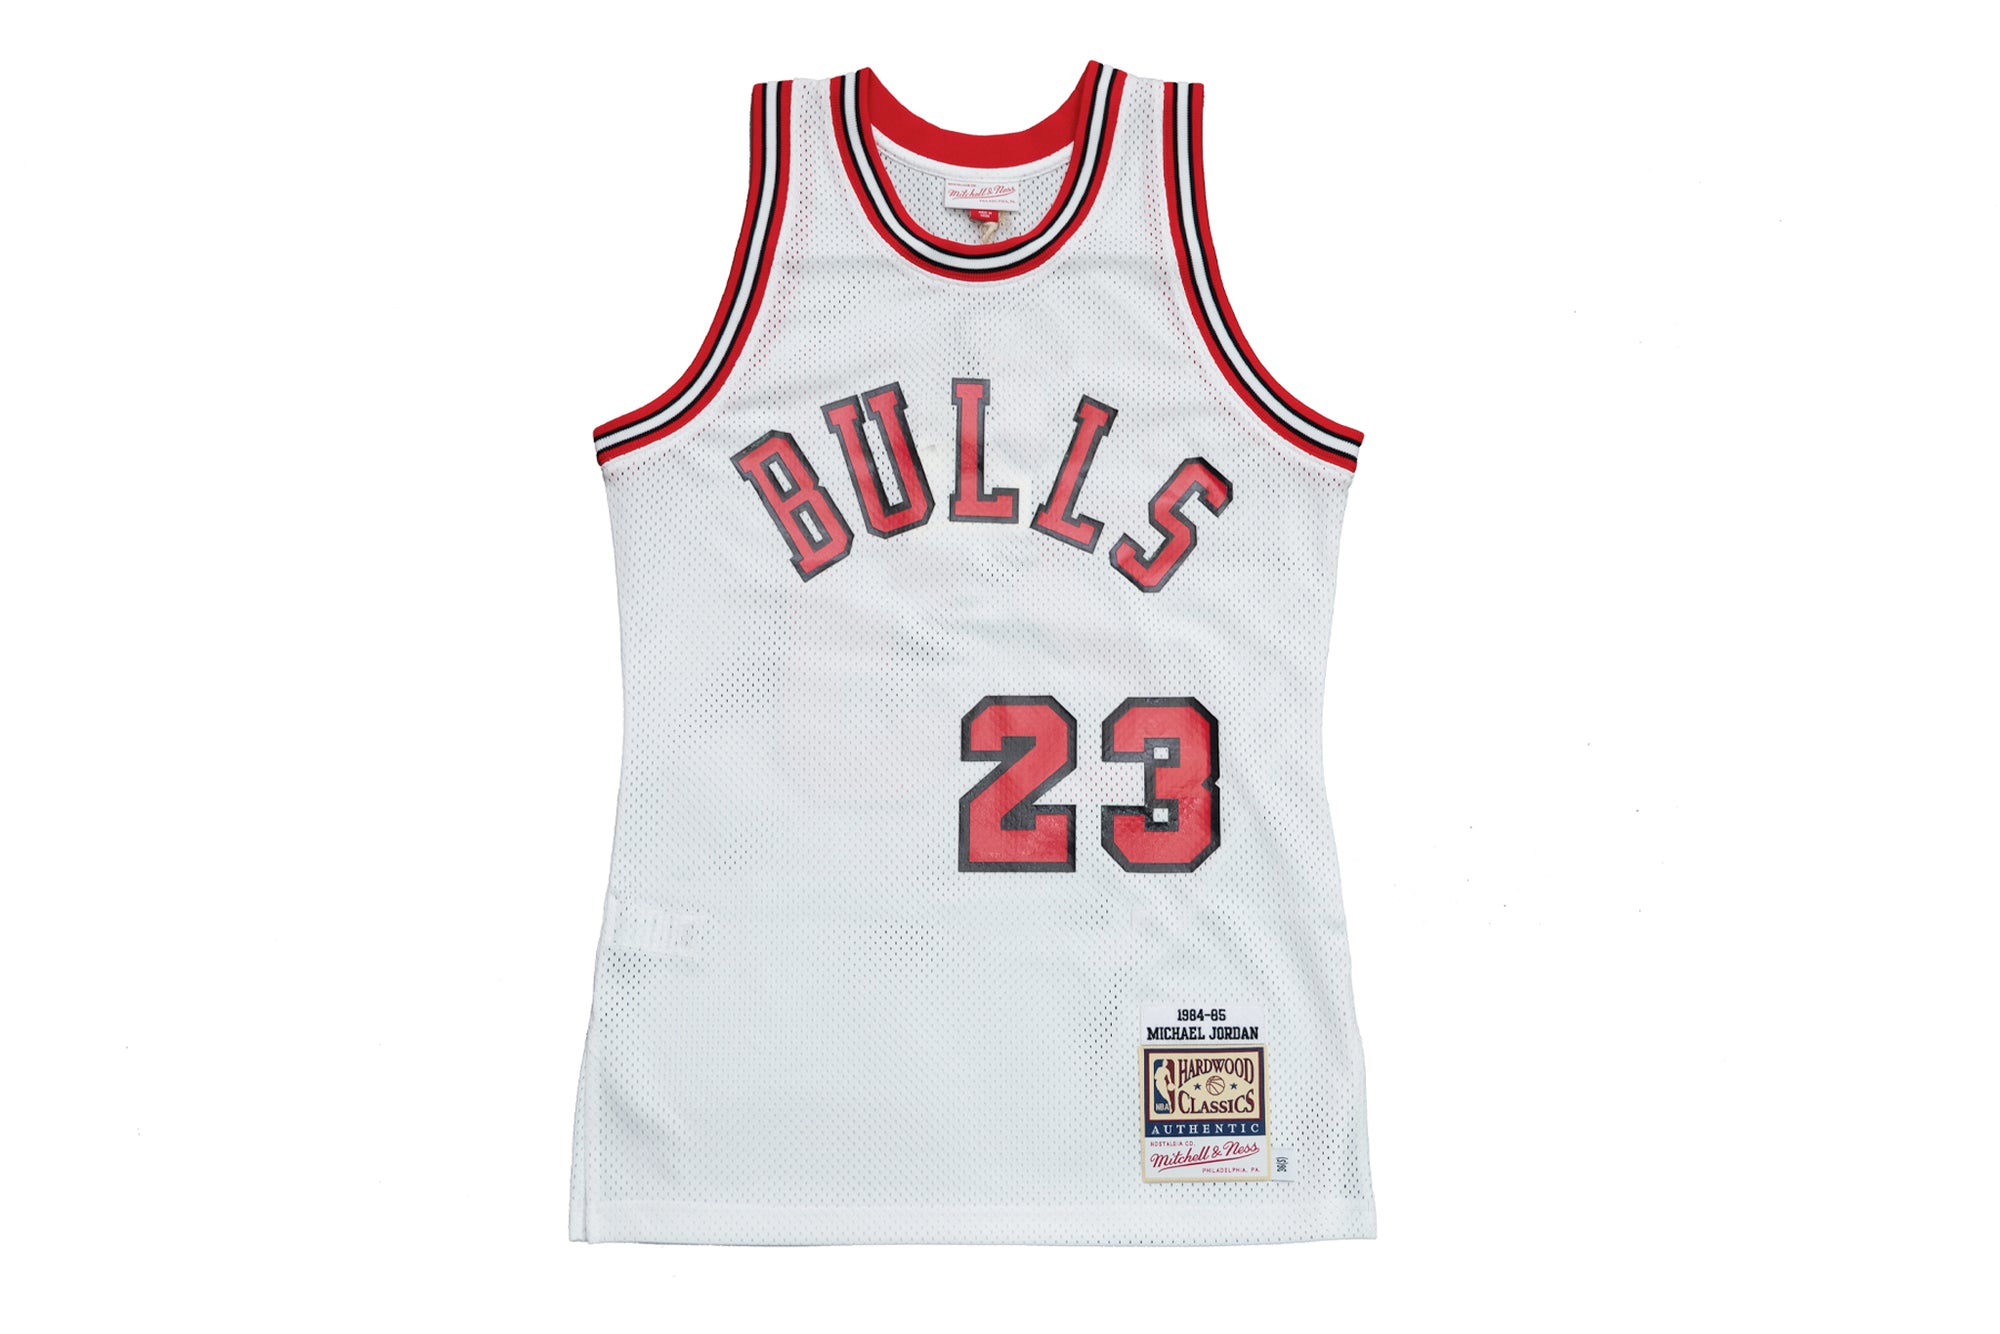 Authentic Jersey Chicago Bulls 1984-85 Michael Jordan - Shop